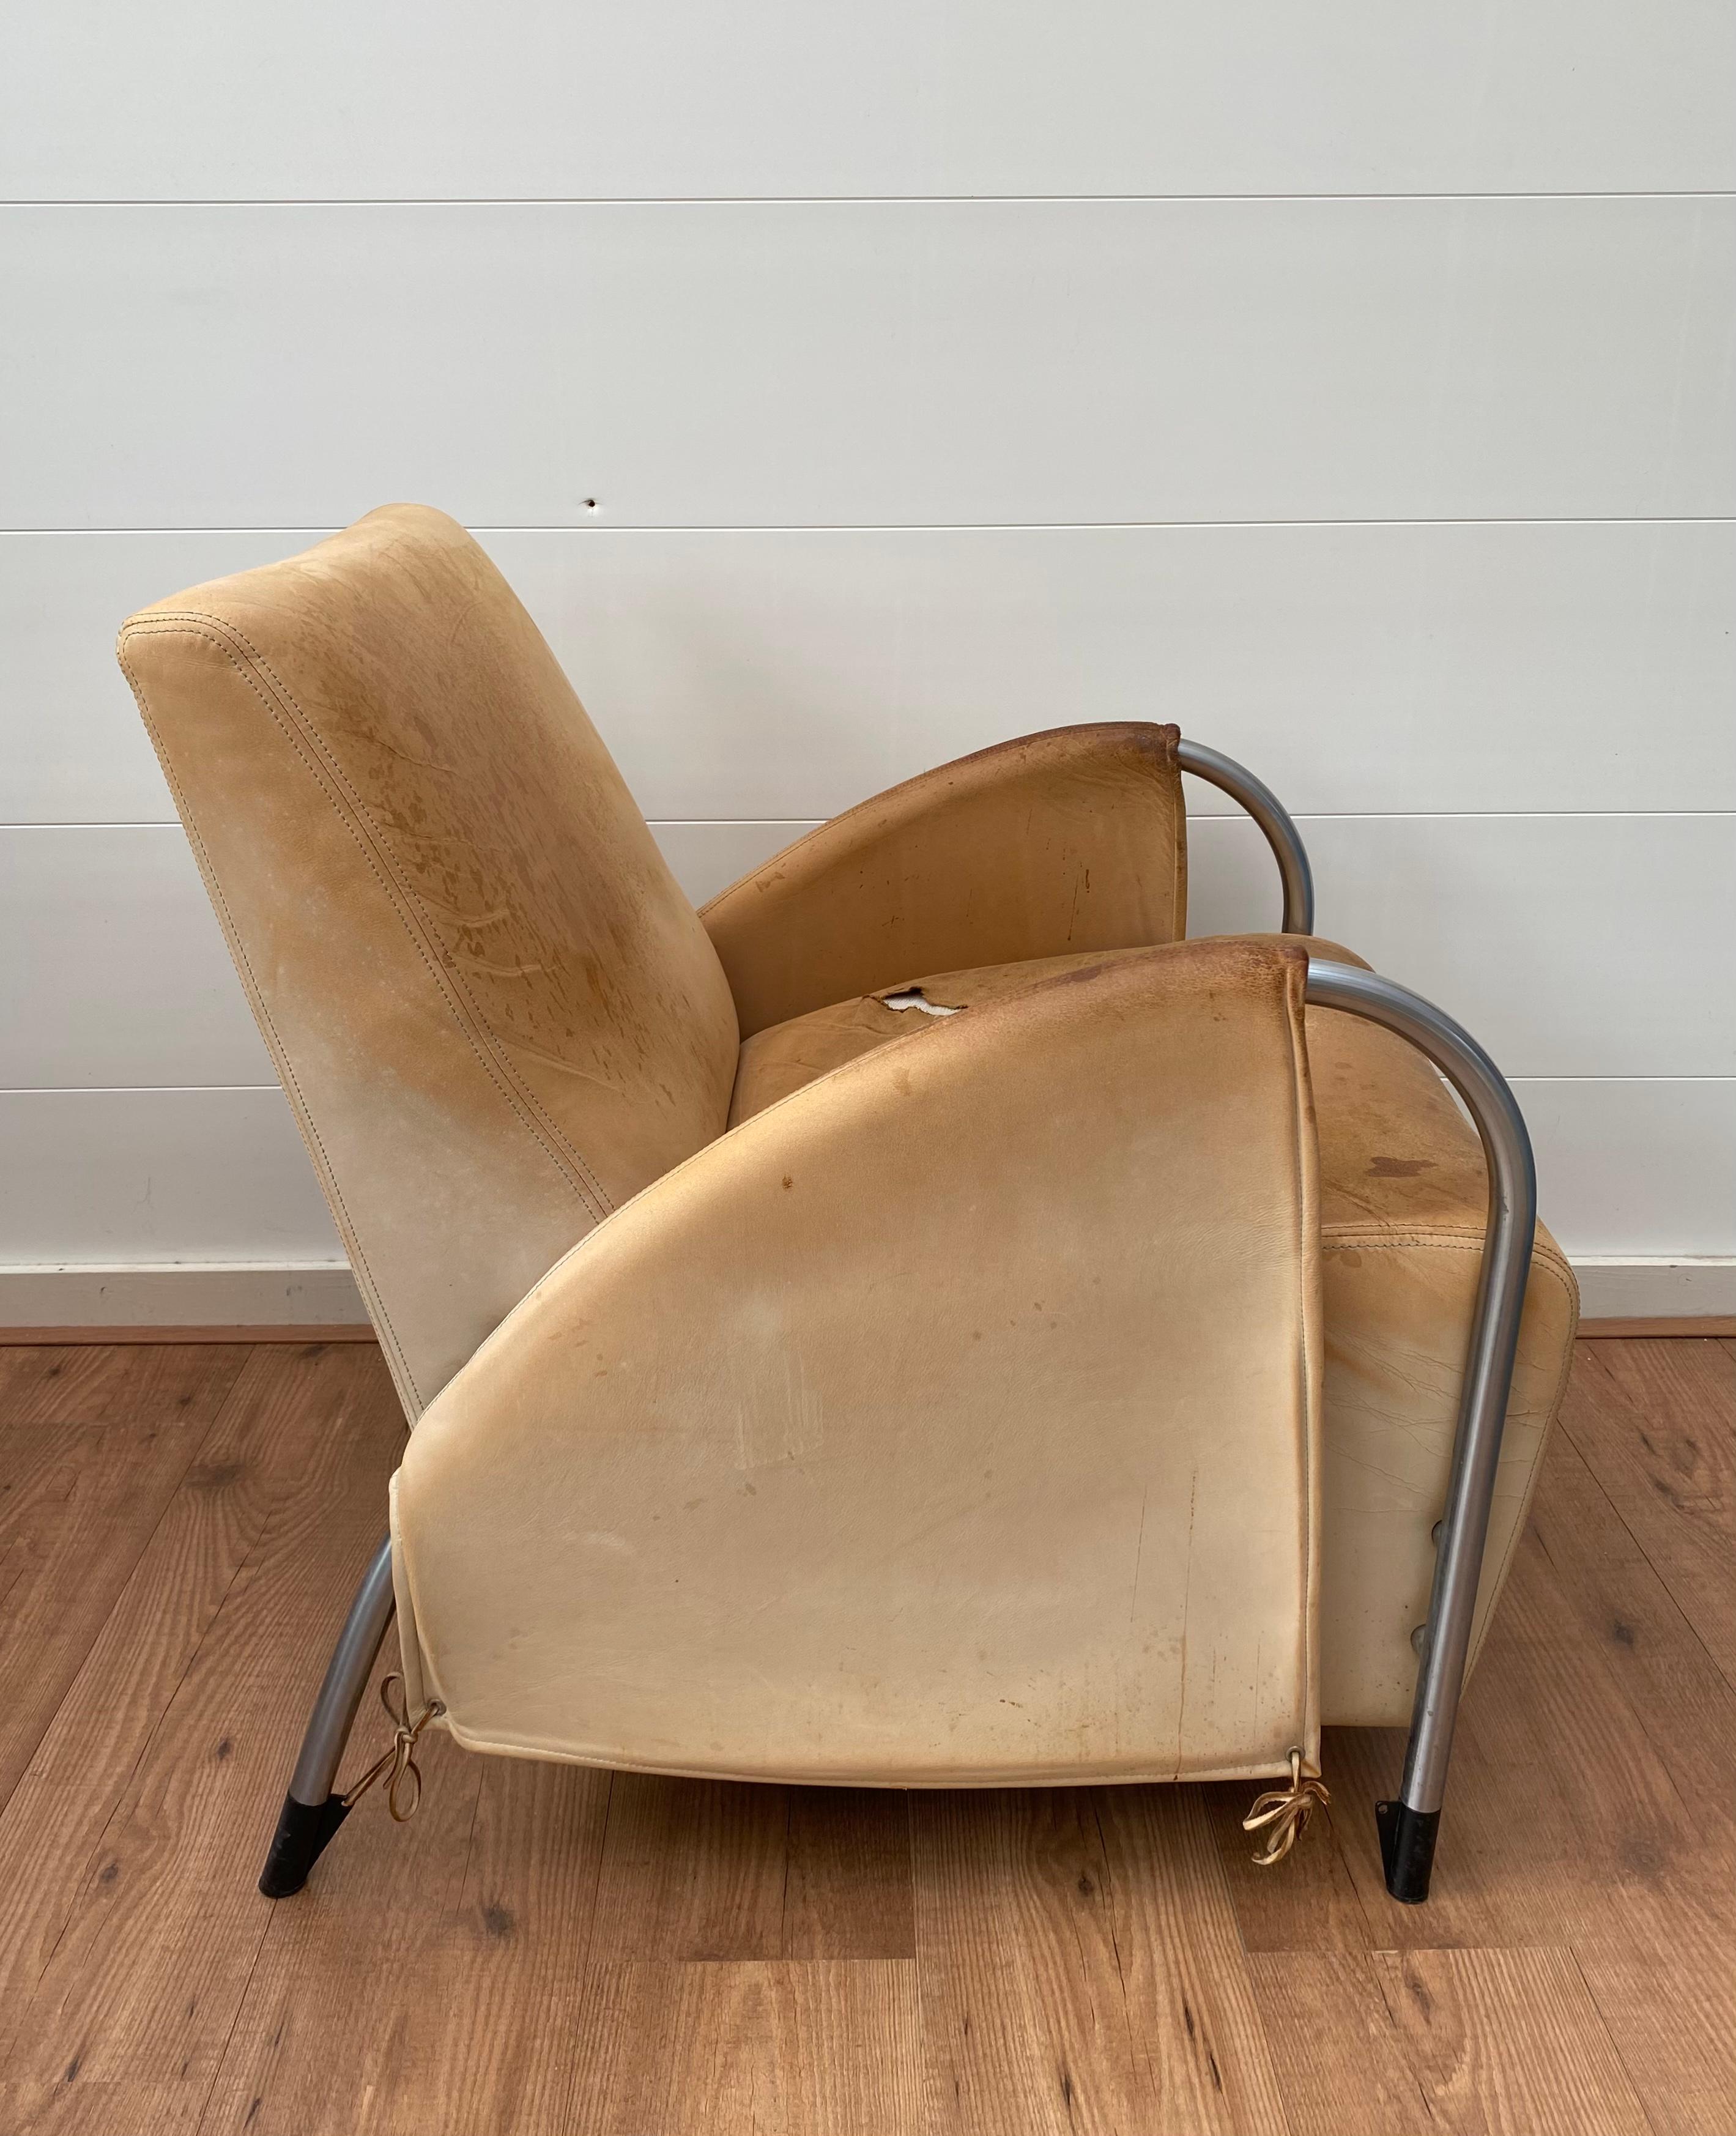 Art Deco, Machine Age Style Armchairs by Jan des Bouvrie for Gelderland For Sale 1